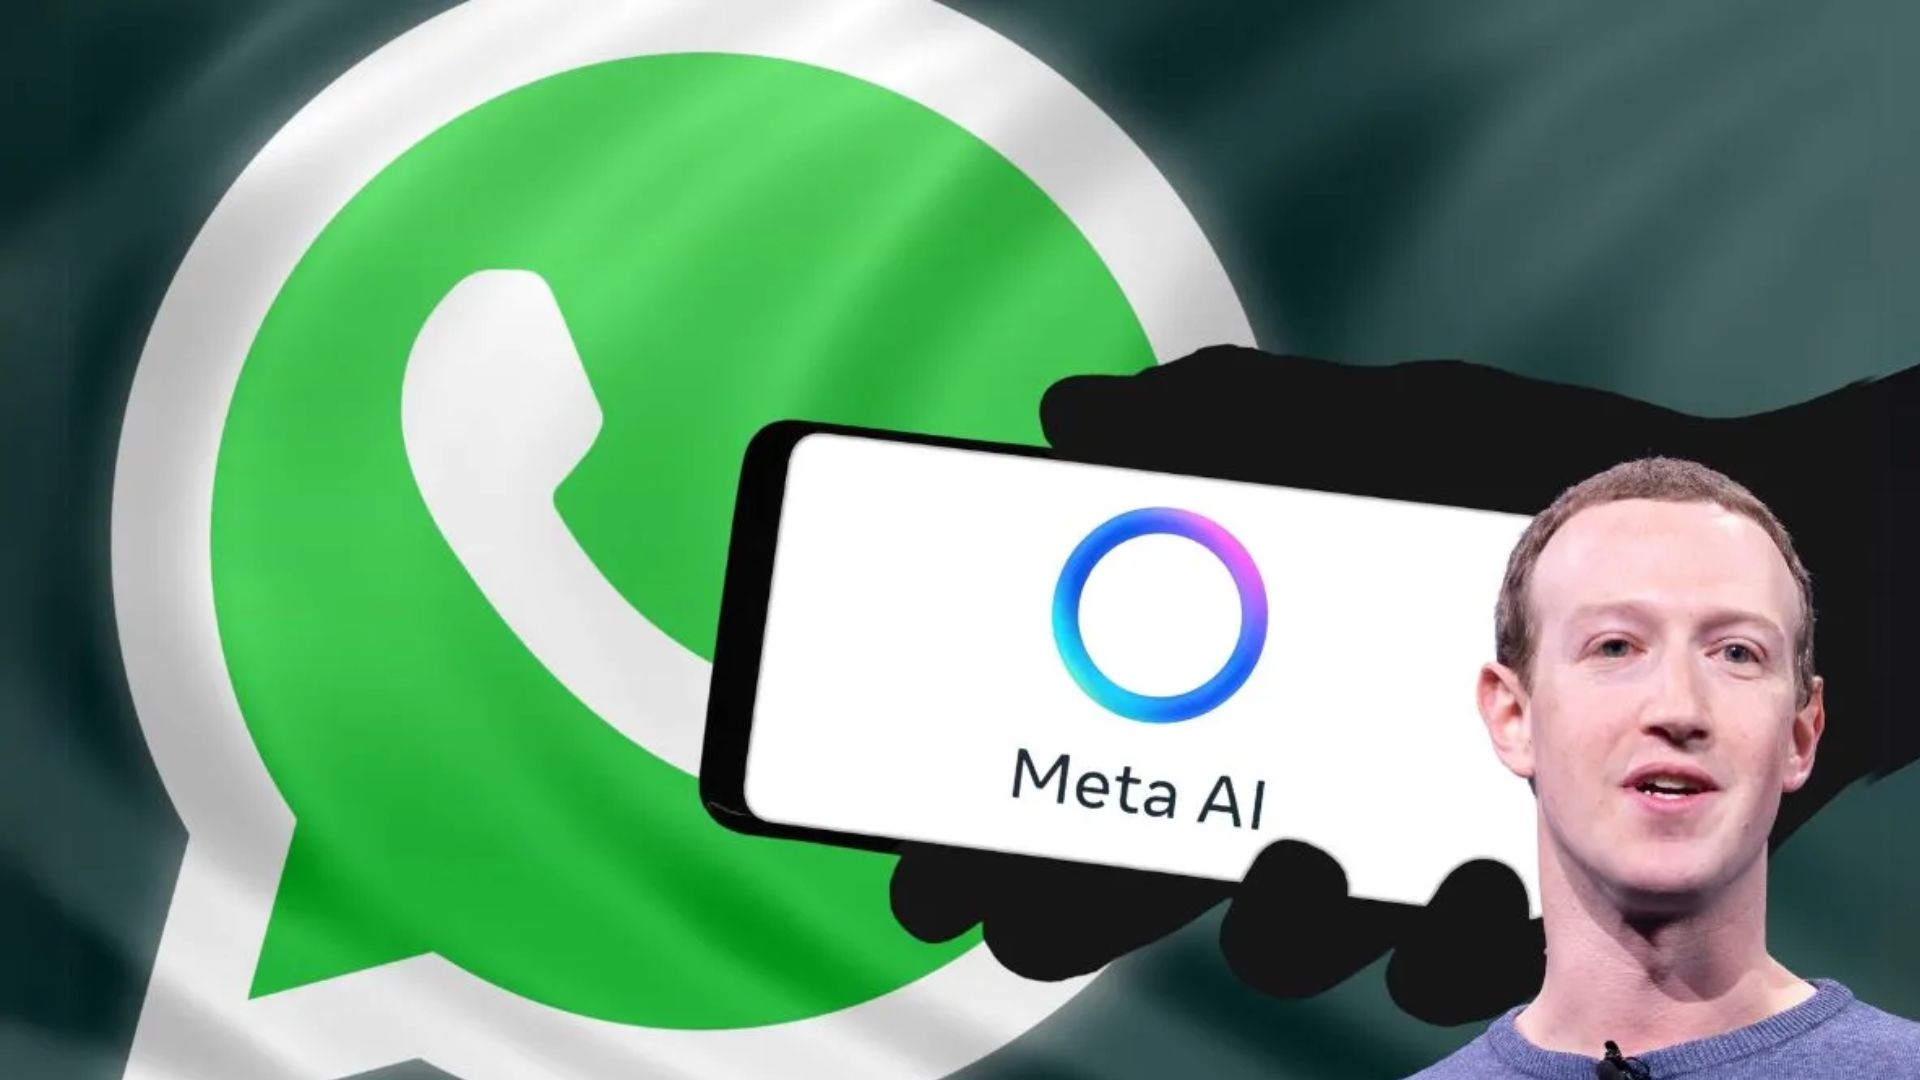 Llega Meta AI, el ChatGPT de WhatsApp que ya está disponible para algunos usuarios